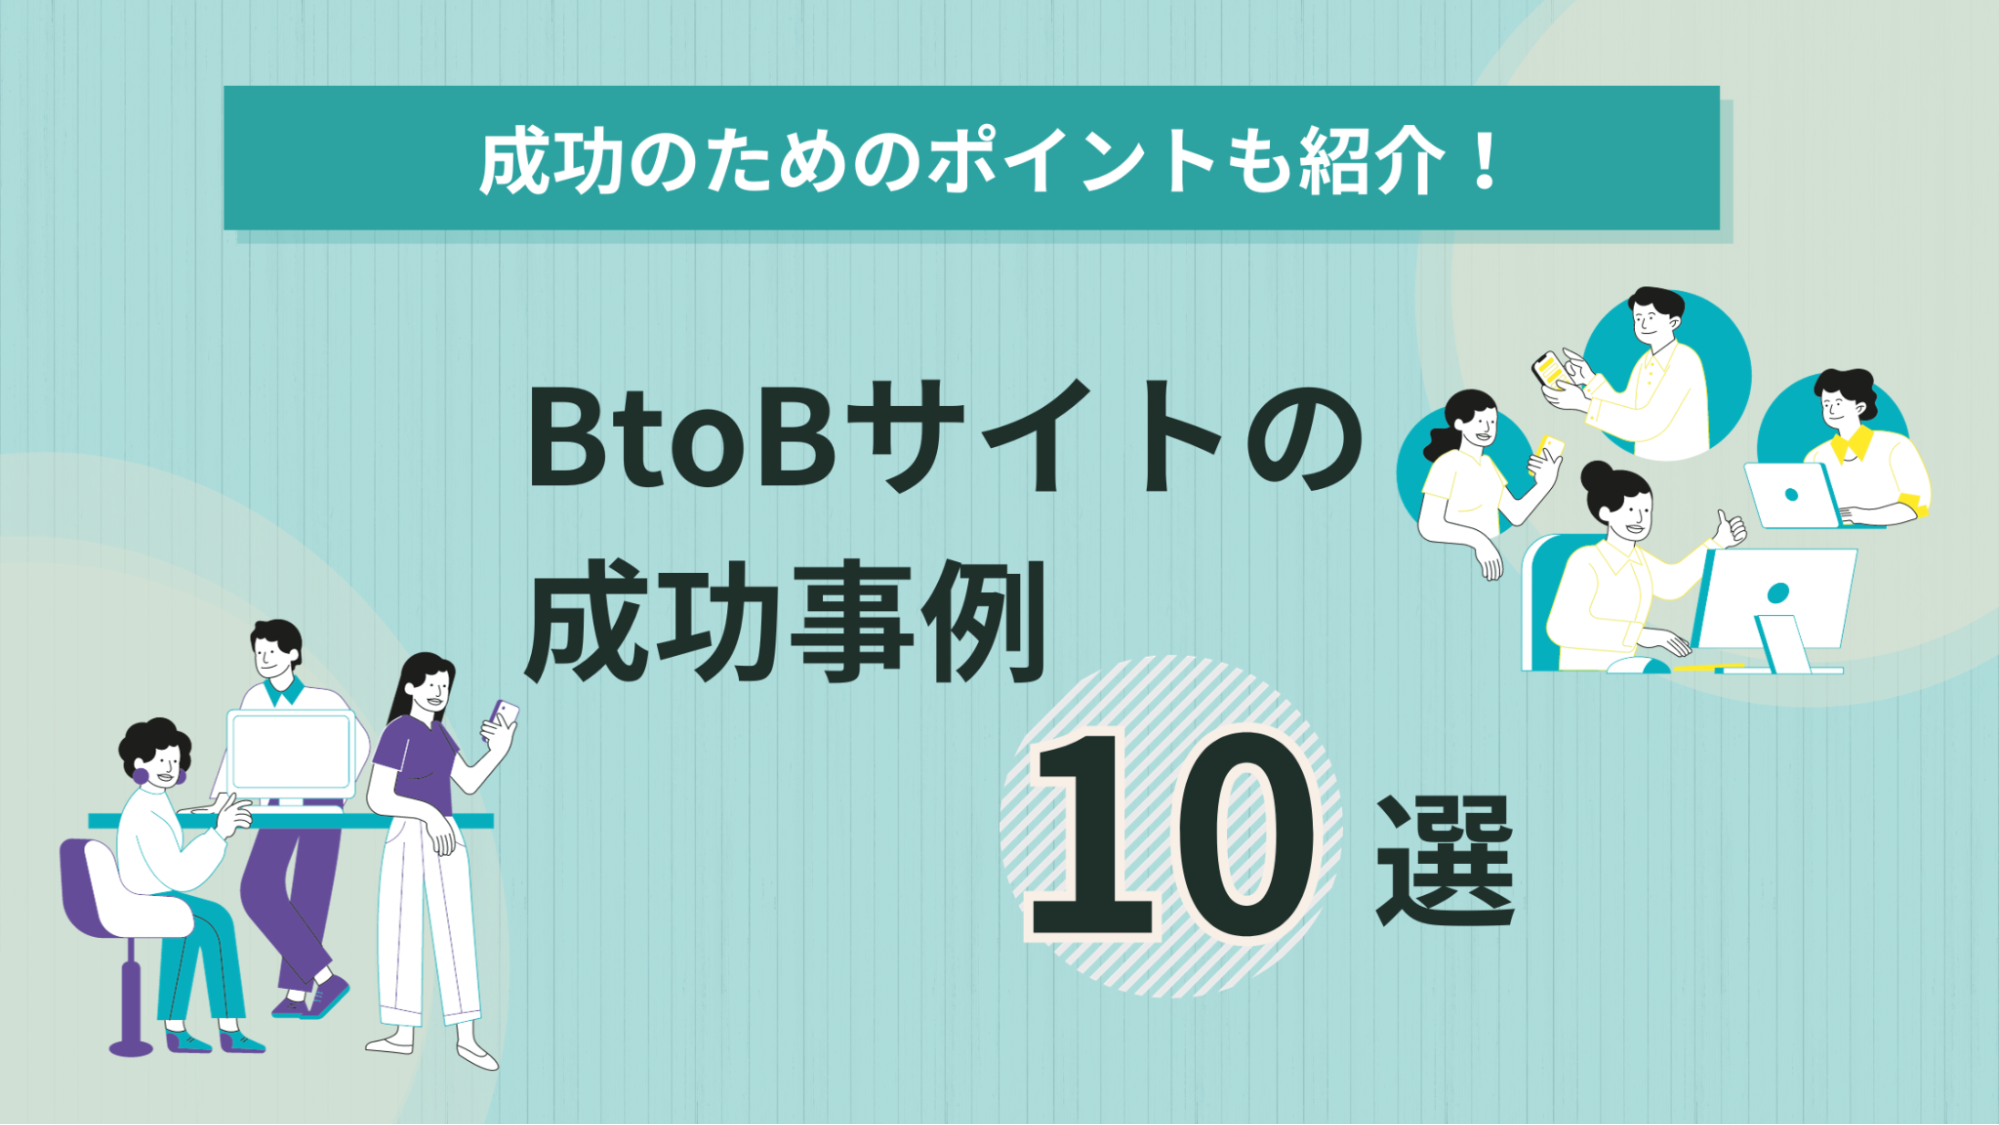 btob サイト 成功 事例 アイキャッチ